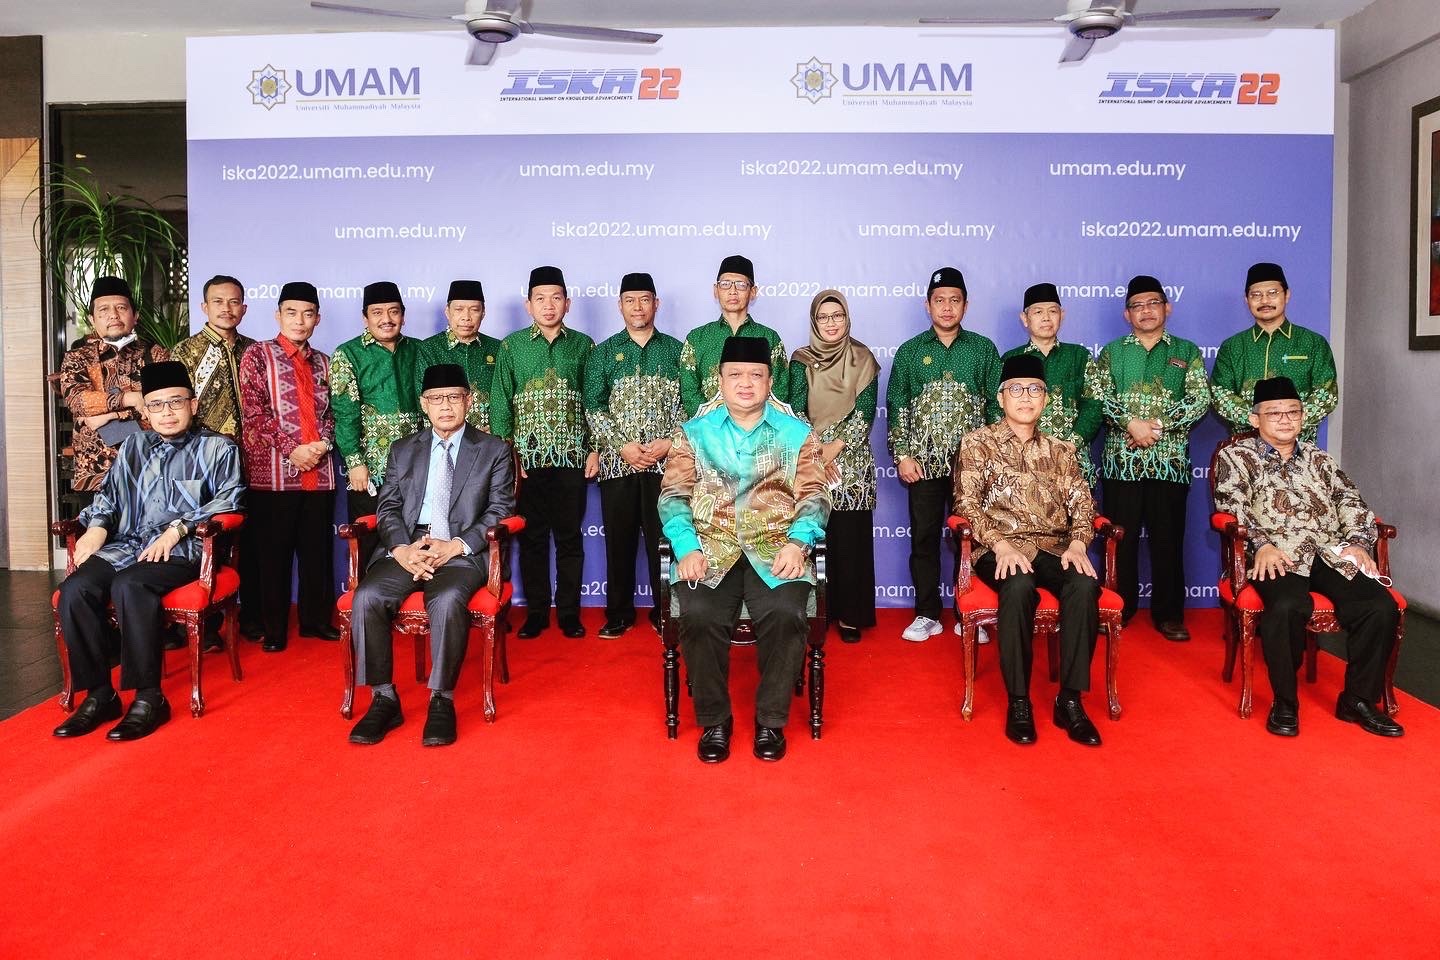 The Crown Prince Tuanku Syed Faizuddin Putra inaugurated the University Muhammadiyah Malaysia (UMAM) establishment in Perlis